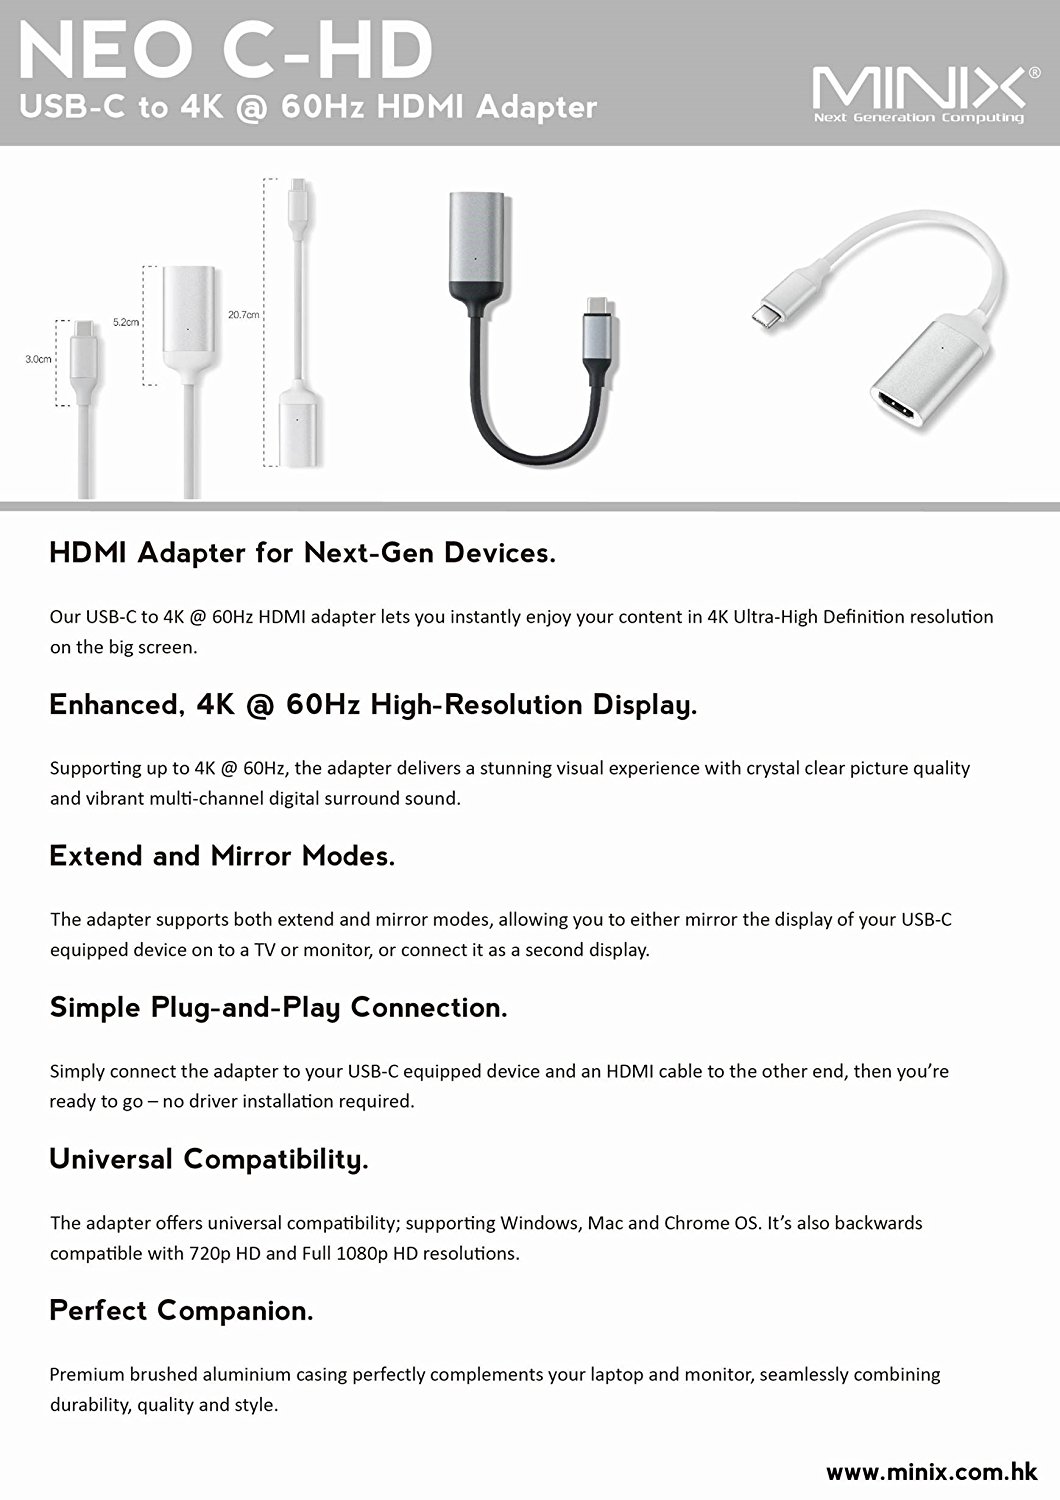 MINIX NEO C-HD, Premium USB-C to 4K @ 60Hz HDMI Adapter [Universal Compatibility – Windows, Mac and Chrome OS]